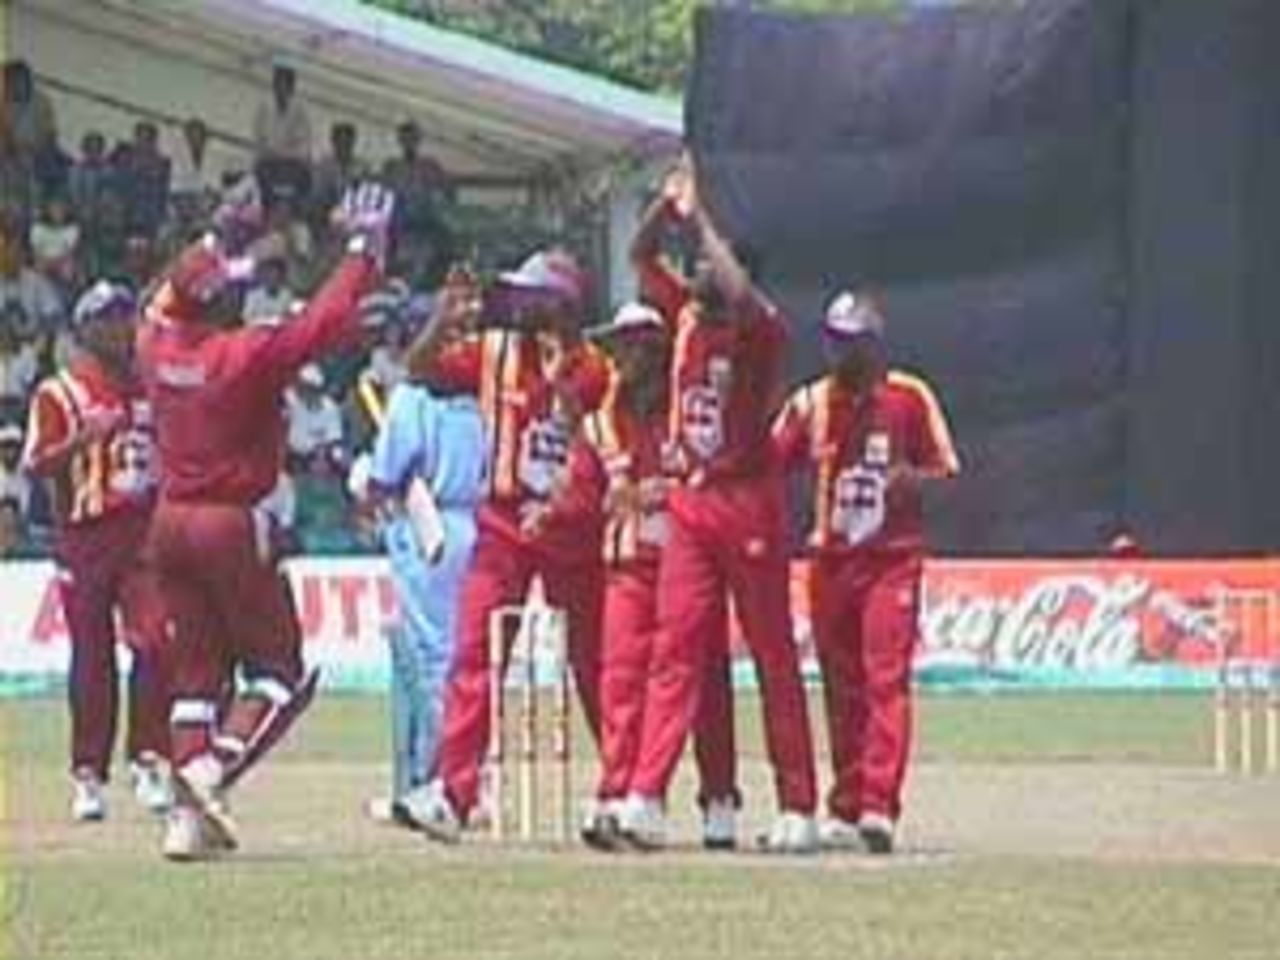 The West Indians celebrate as Kambli fails yet again, India v West Indies (Final), Coca-Cola Singapore Challenge, 1999-2000, Kallang Ground, Singapore, 7 Sep 1999.